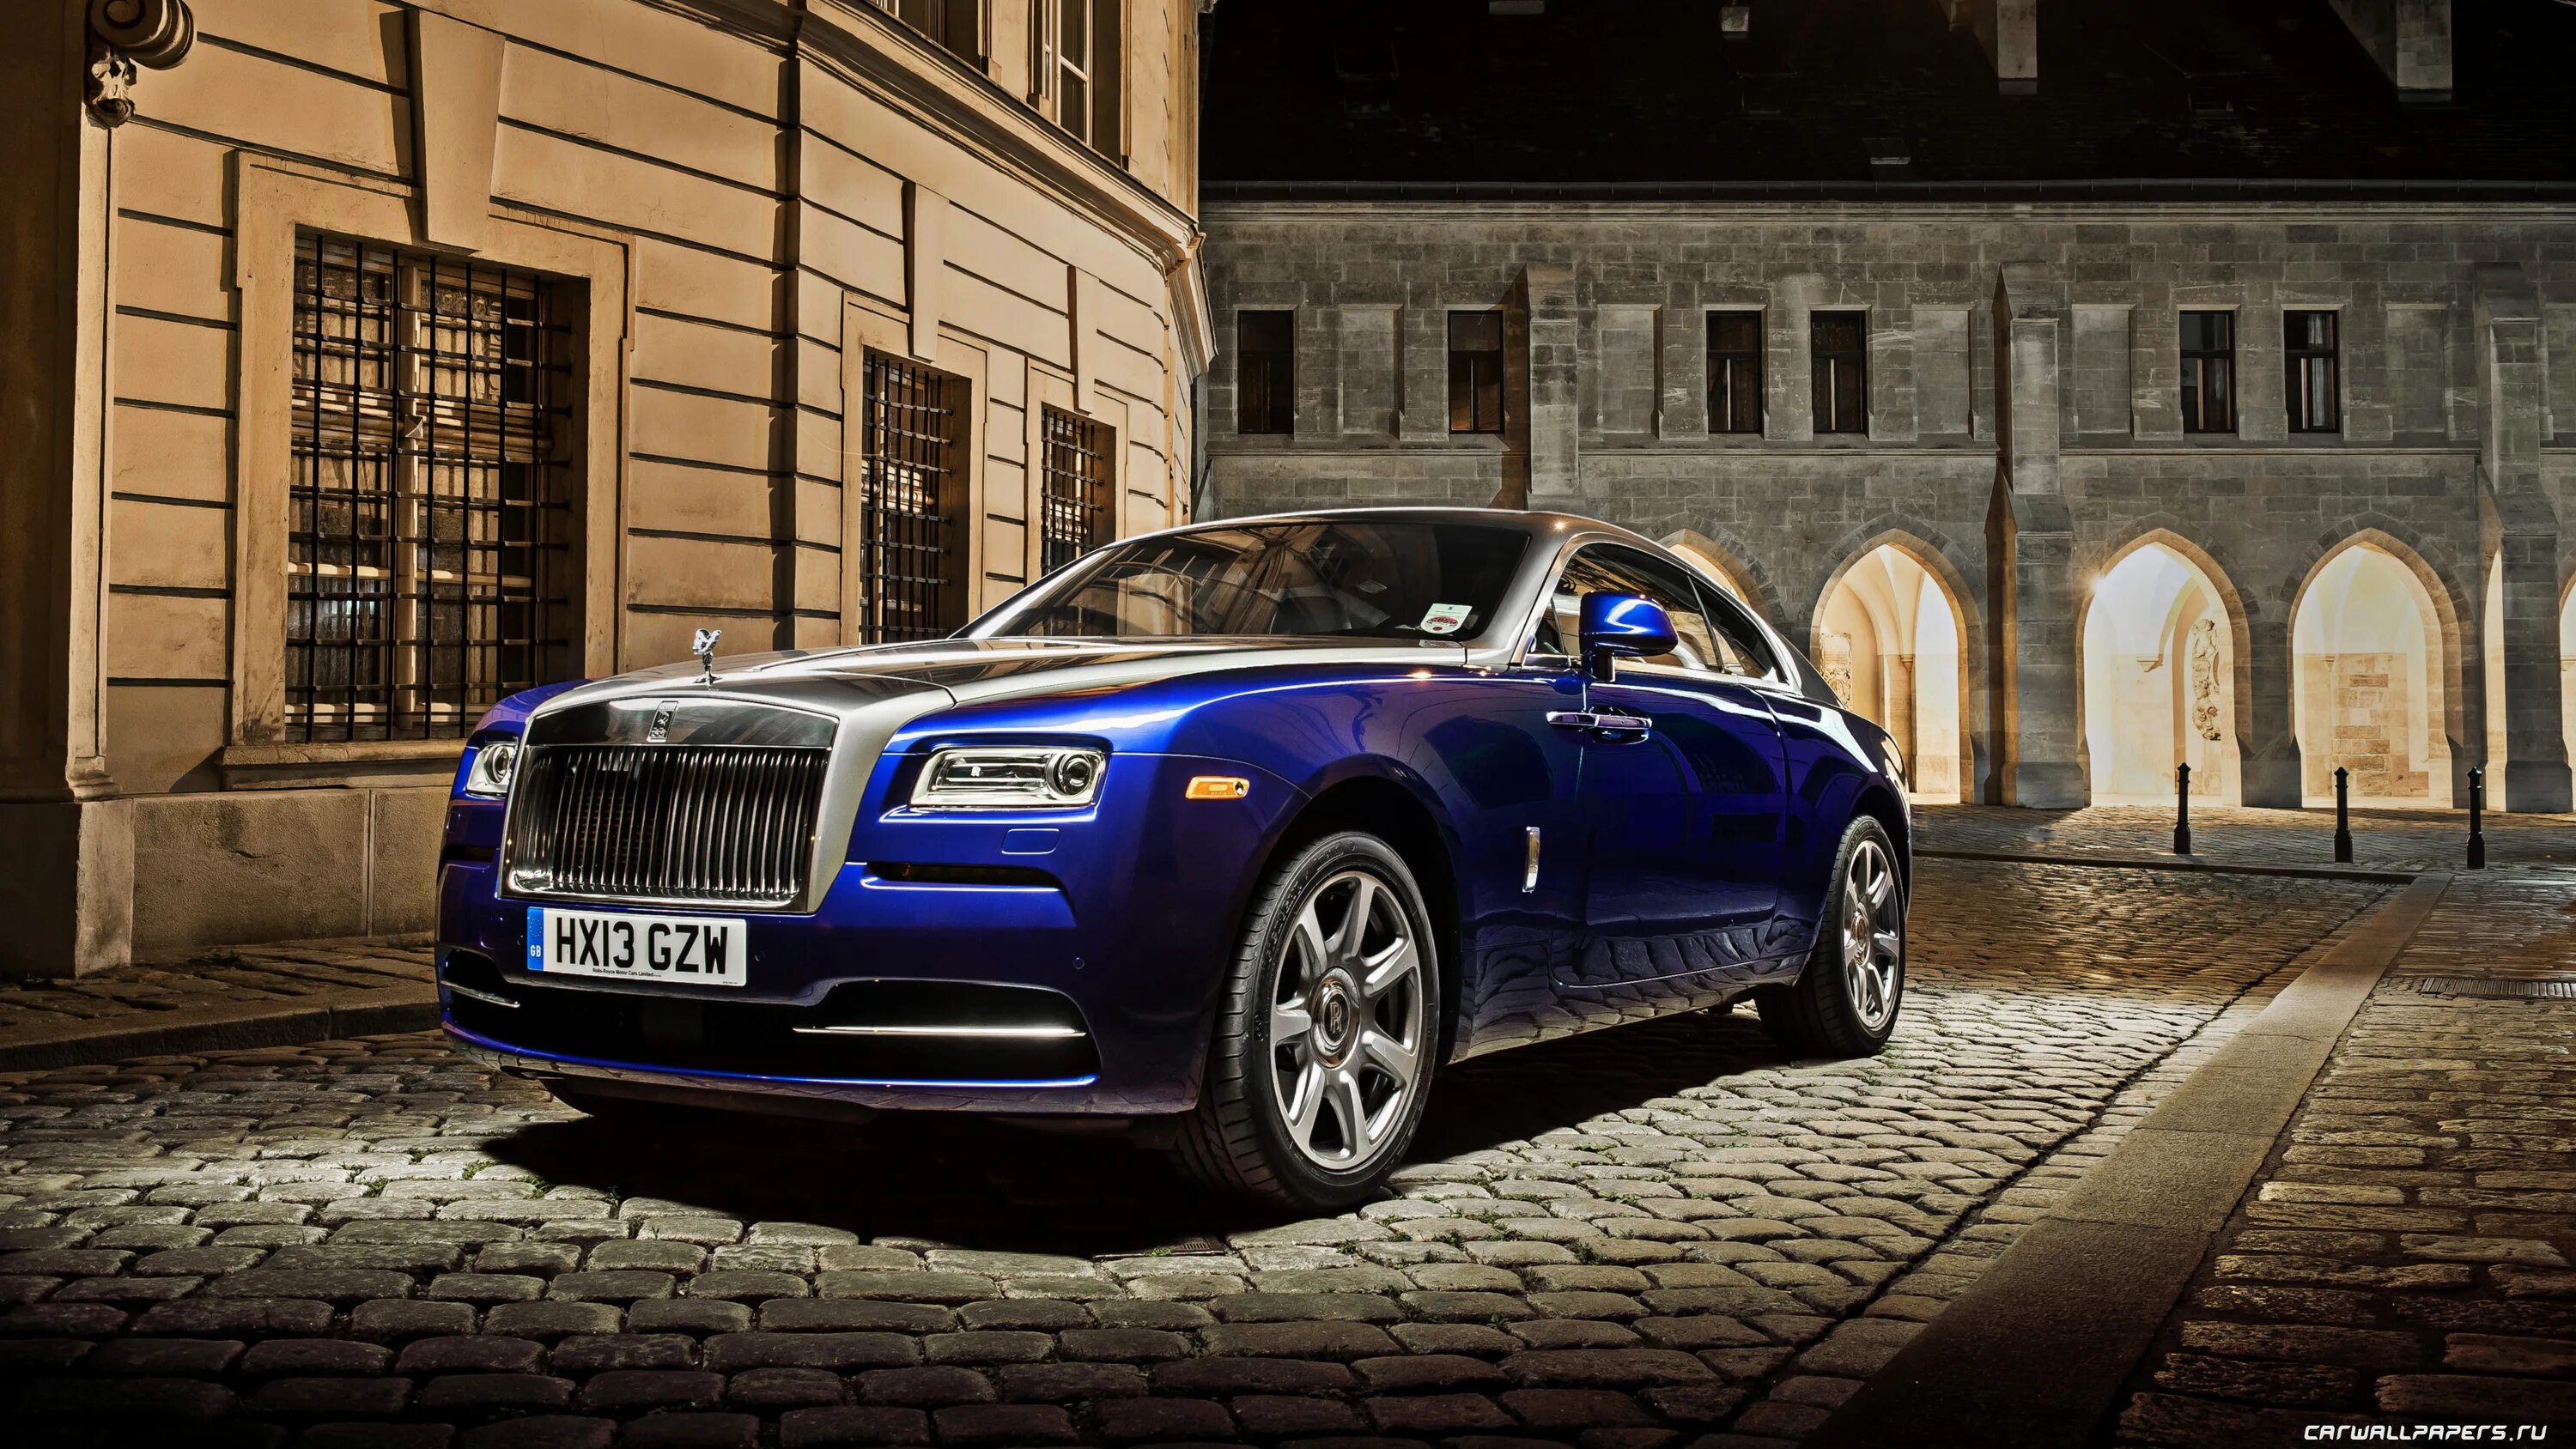 Автомобиль rolls royce. Машина Rolls Royce Wraith. Роллс Ройс 2016. Rolls-Royce Wraith (2013). Rolls Royce Phantom Coupe 2020.